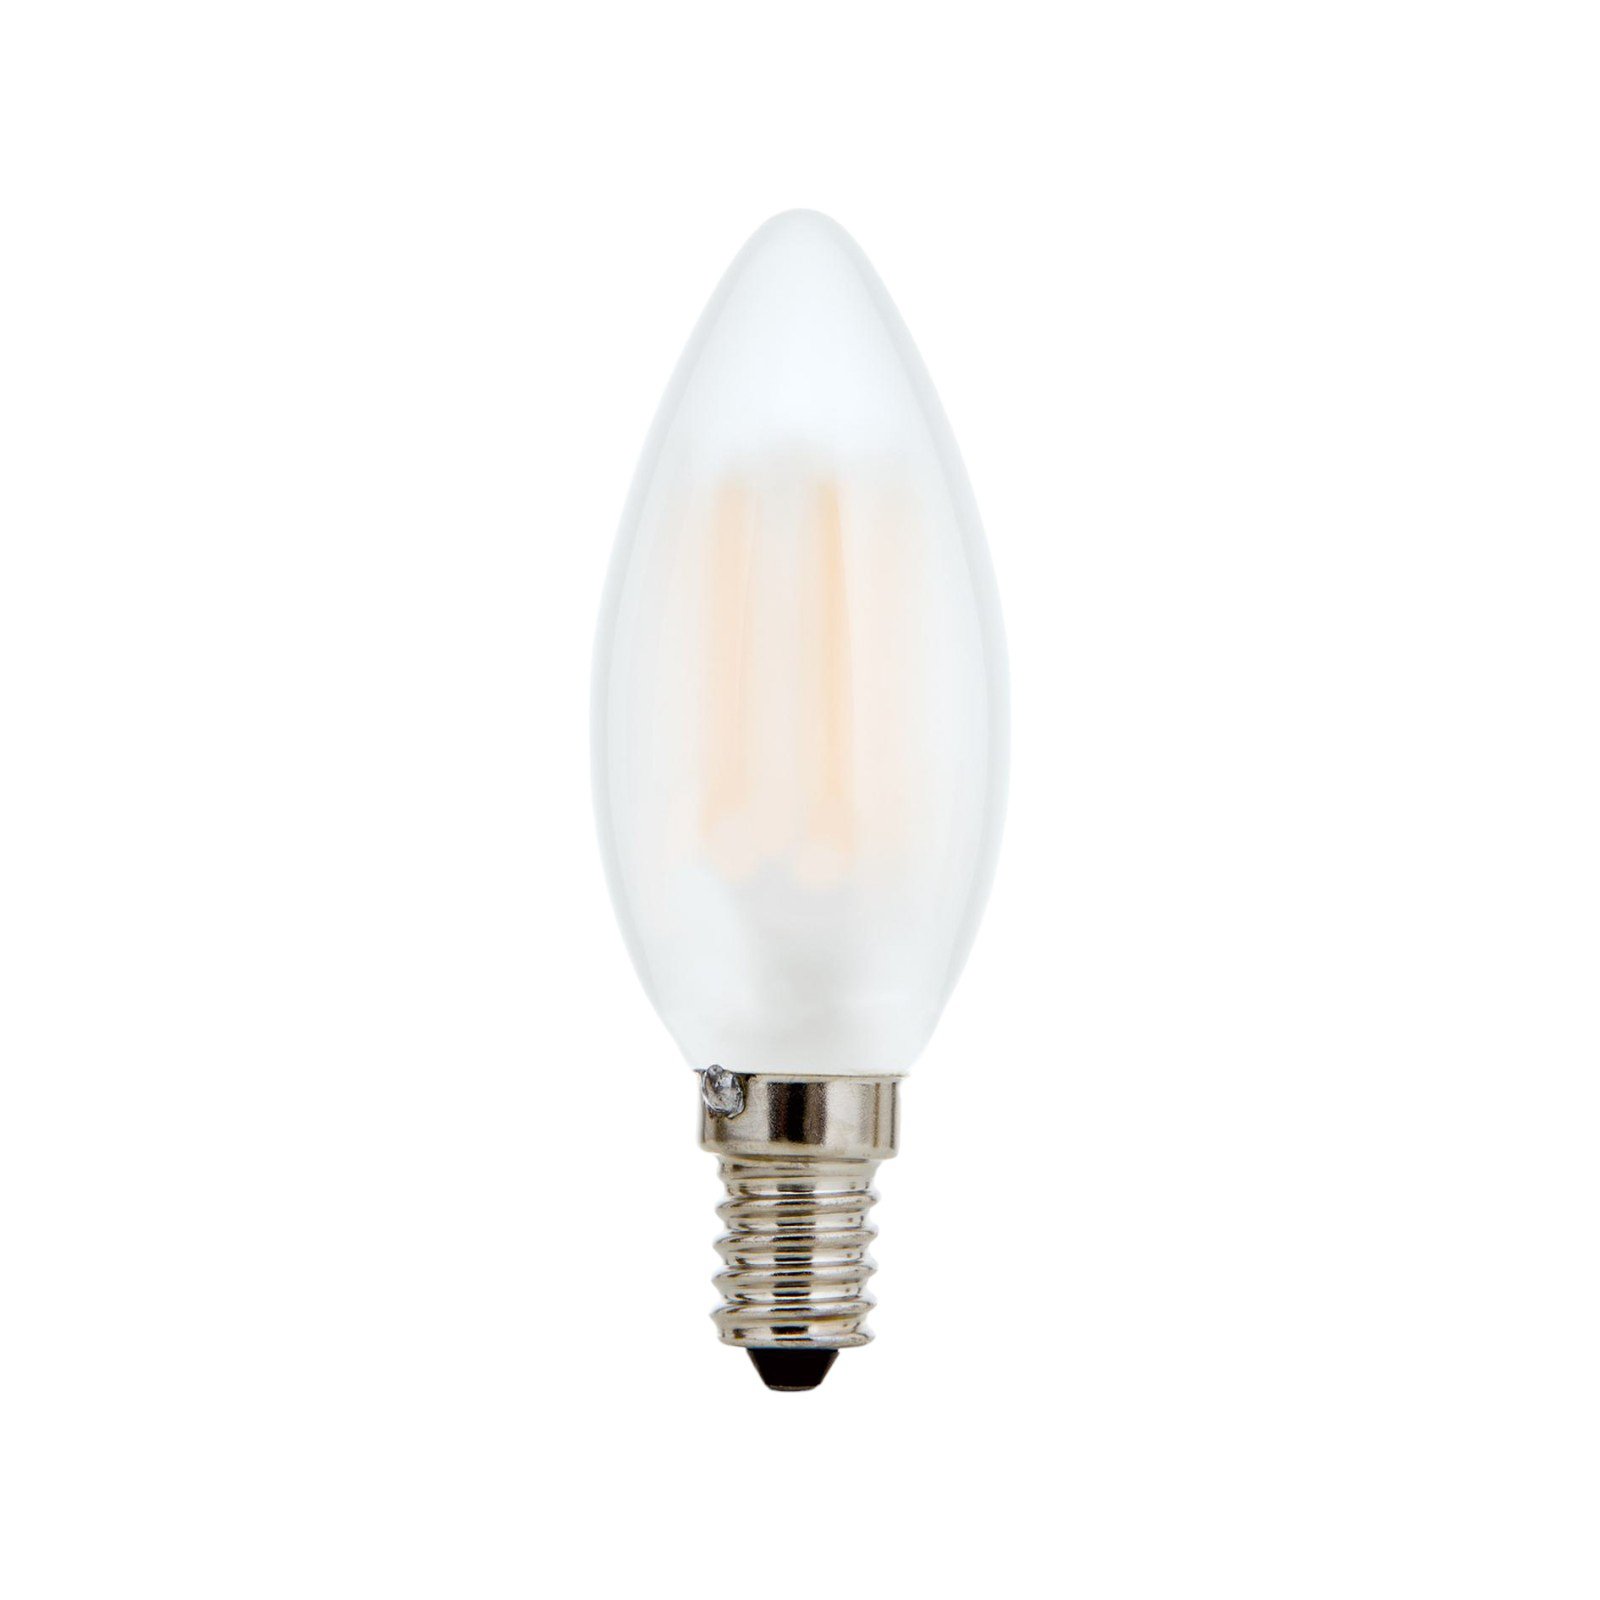 LED lamp E14 C35, mat, 6W, 2700 K, 720 lm, dimbaar